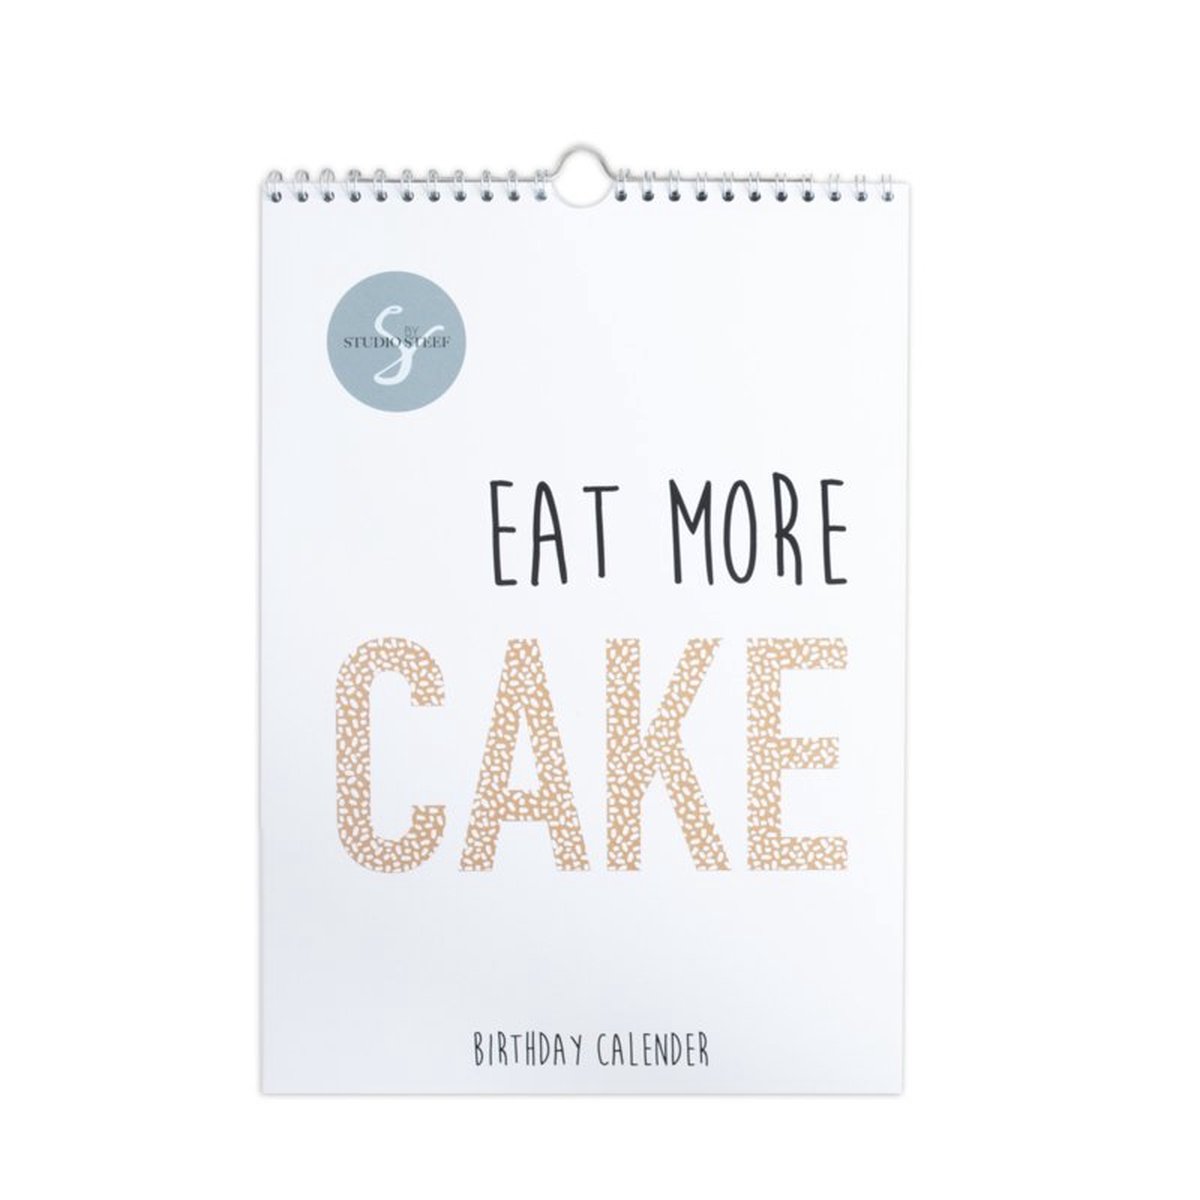 Eat more Cake verjaardagskalender Quotes | verjaardagskalender geen jaartal | verjaardagskalender volwassenen | verjaardagskalender staand | kalender verjaardagskalender